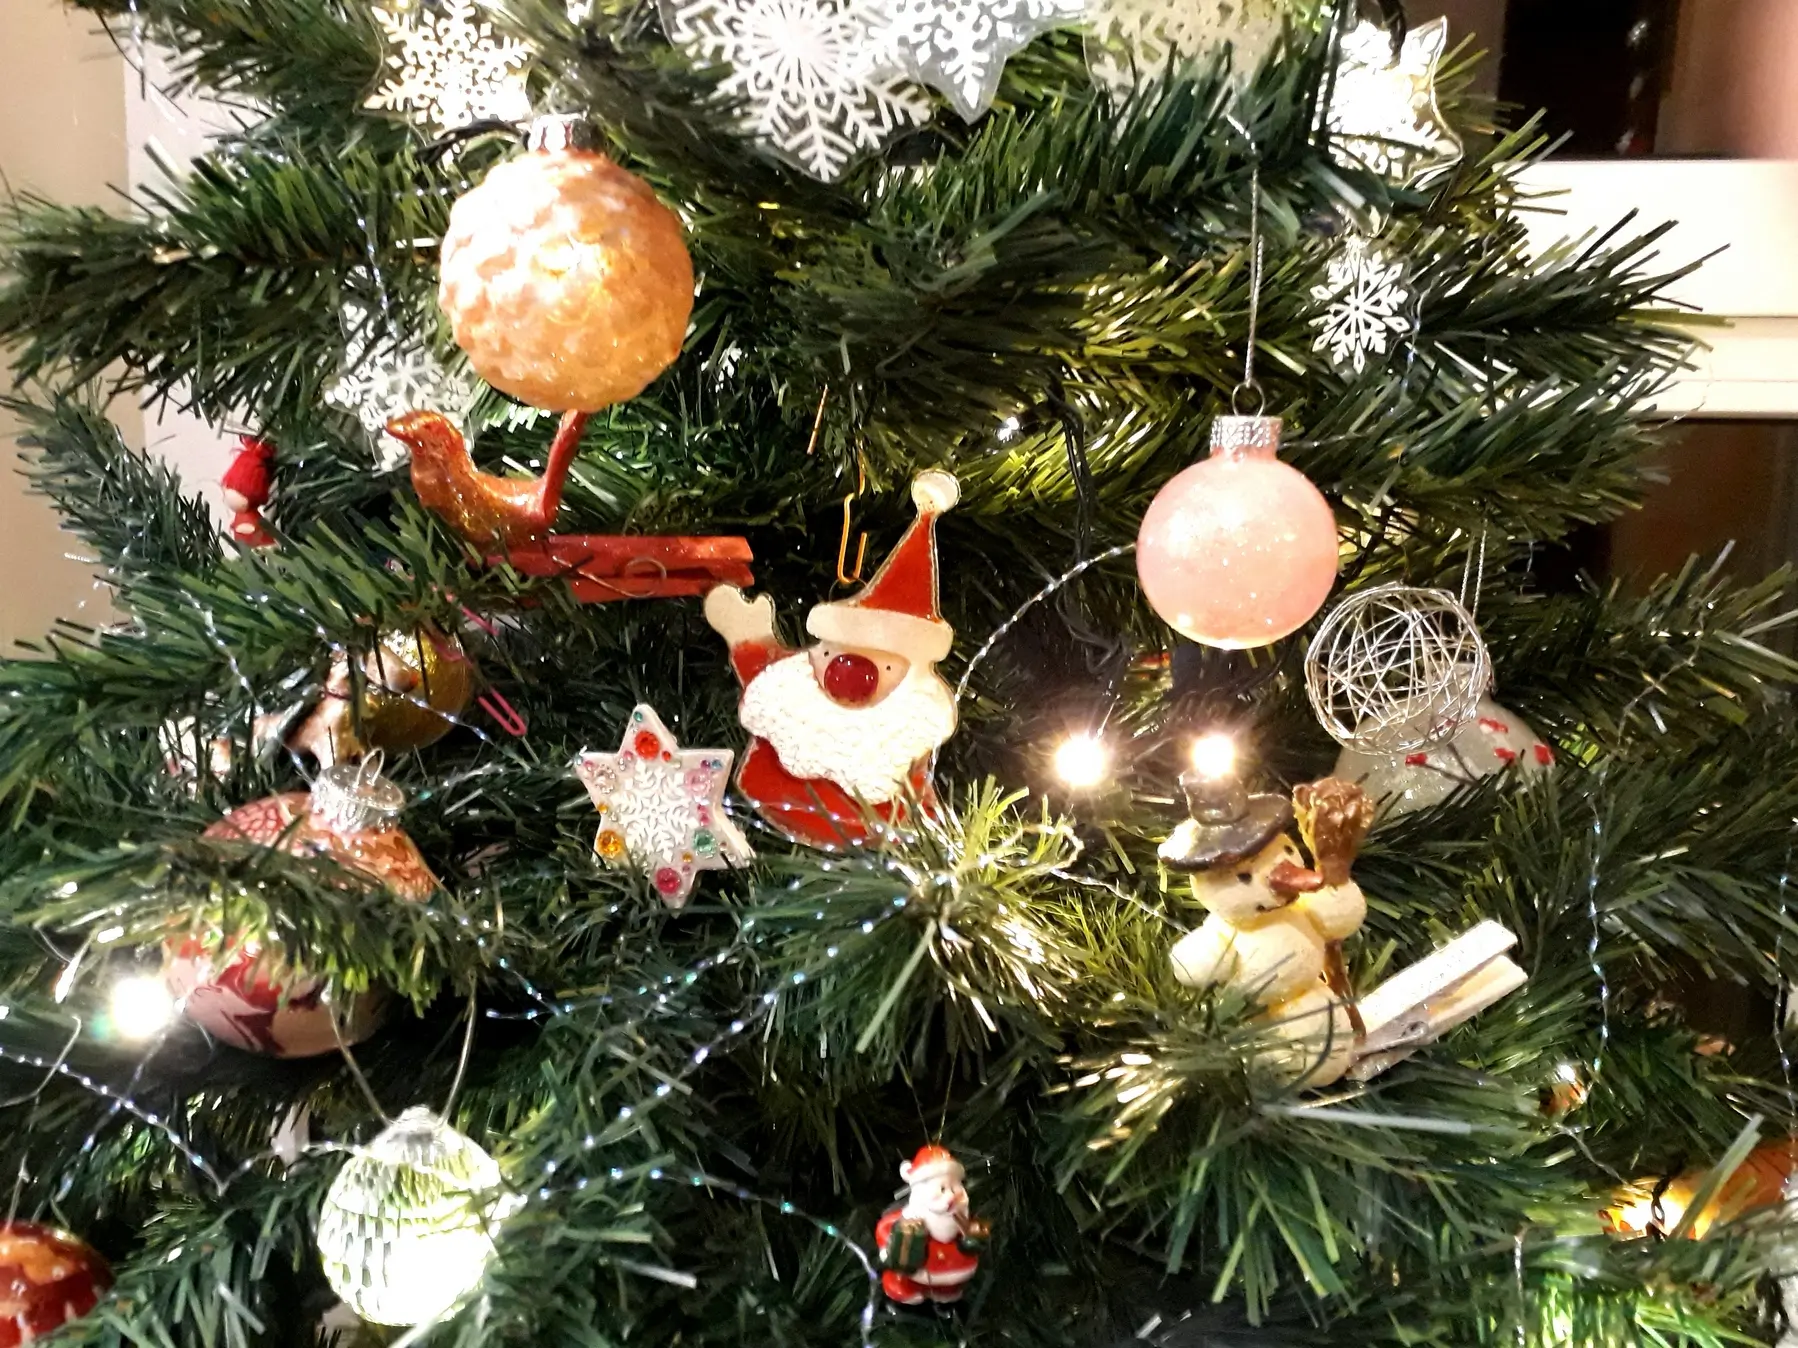 Drei Könige Feste in Deutschland im Dezember Advent / Festivals in Germany in December